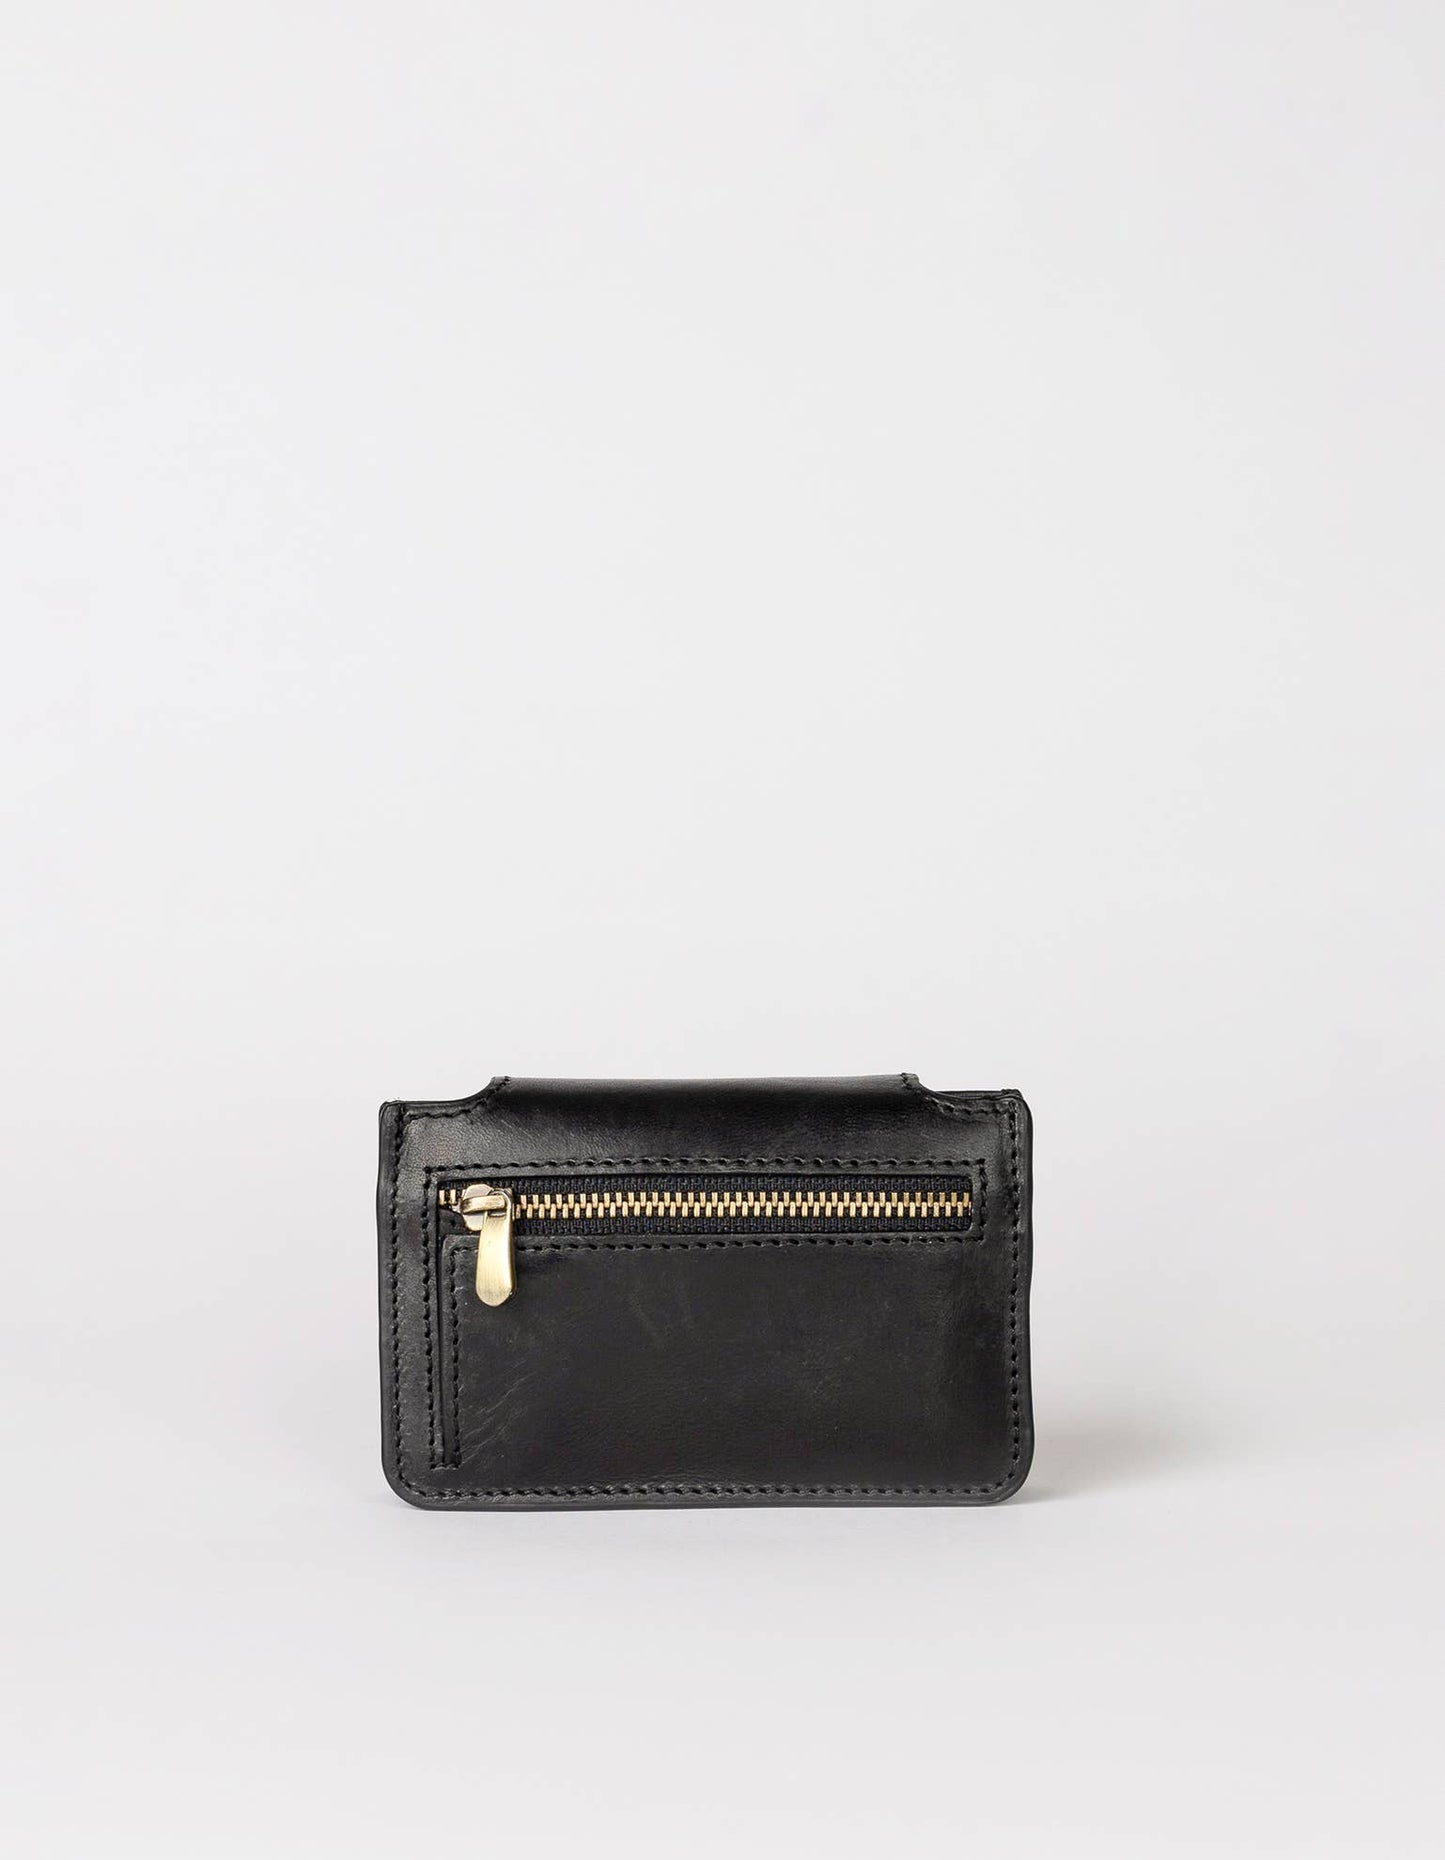 Harmonica Wallet - Black Classic Leather